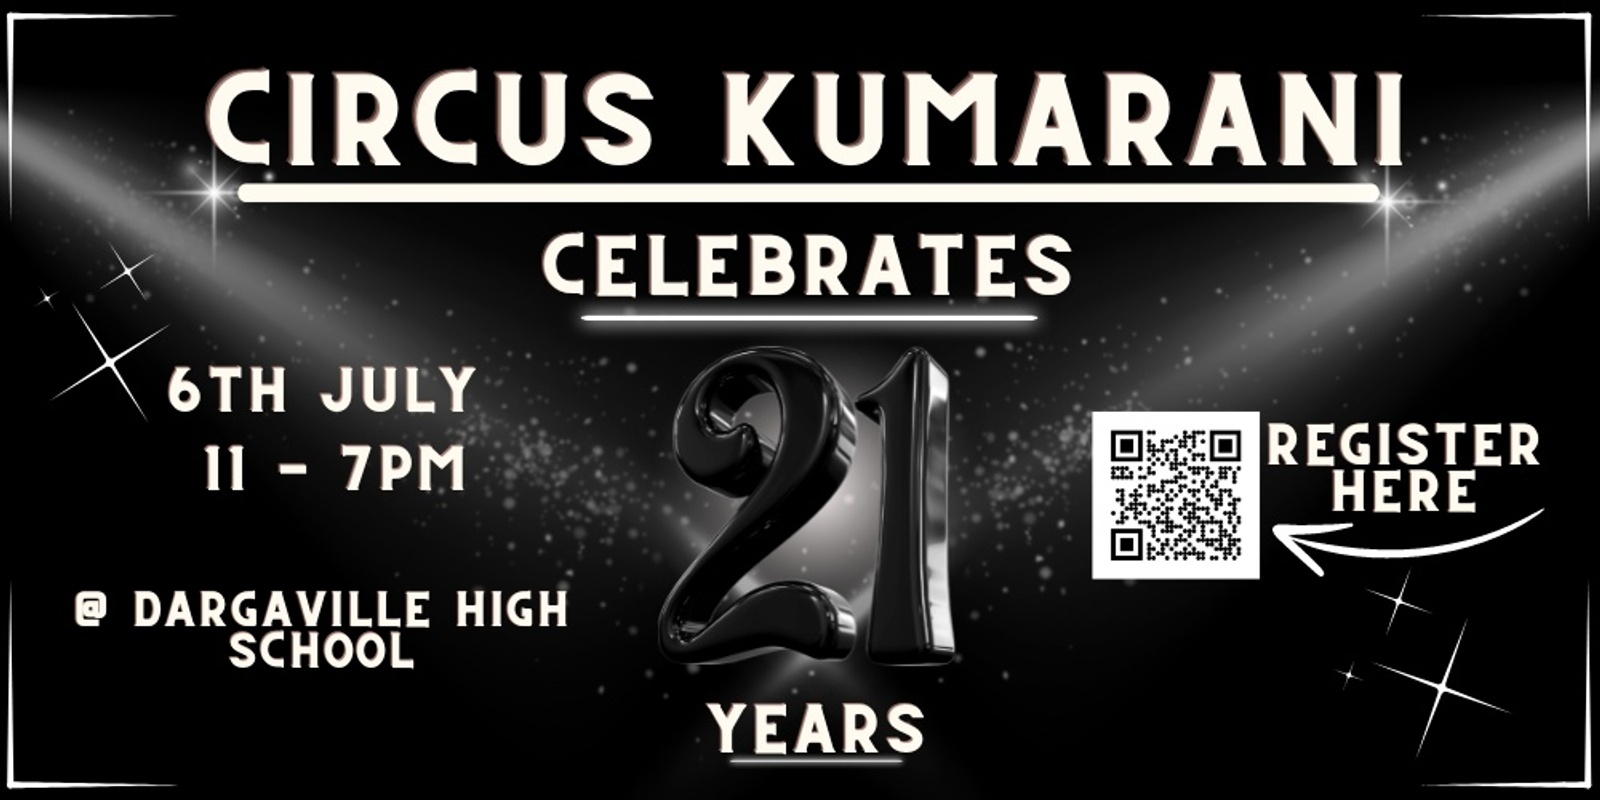 Banner image for Circus Kumarani's 21st Birthday Celebration